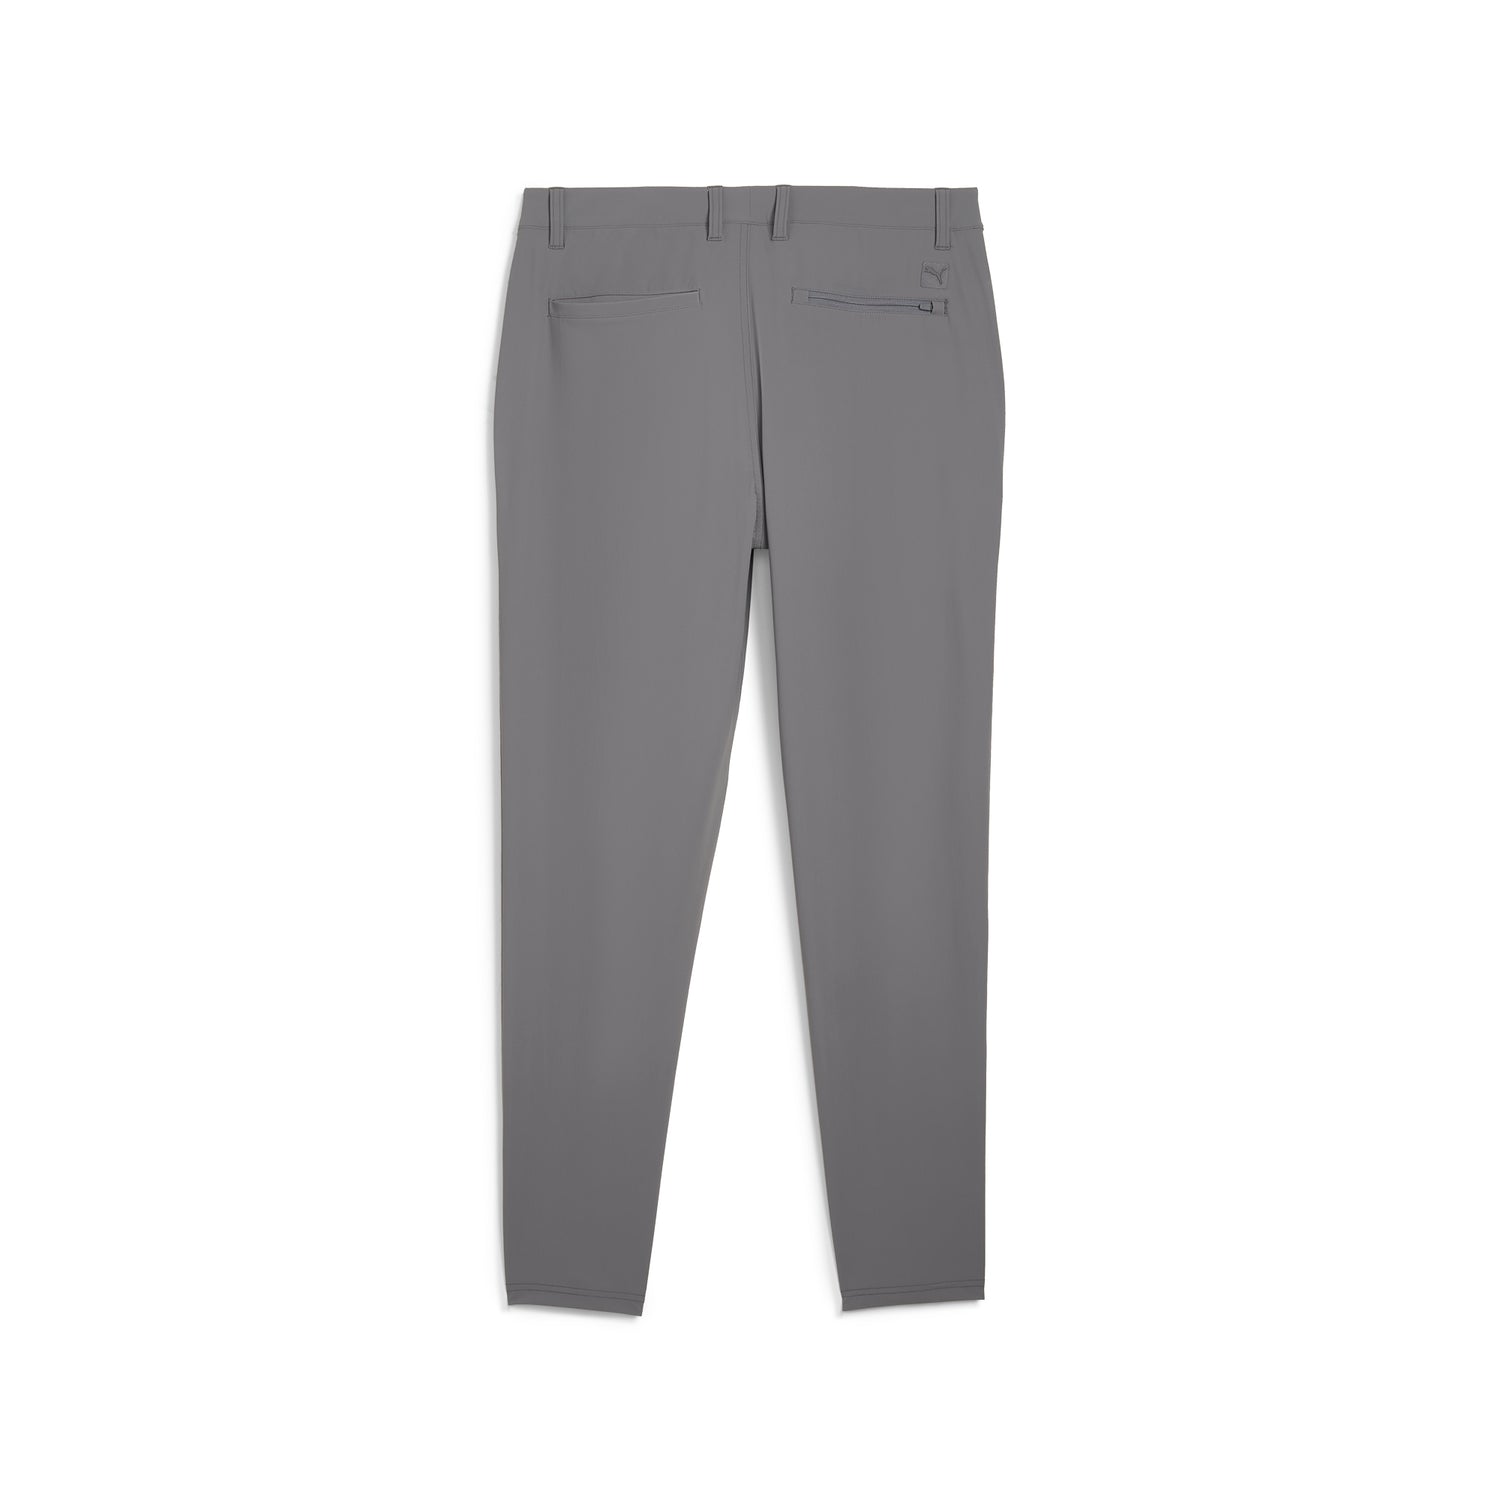 Ralph Lauren Golf Khaki Beige Stretch Women's Pants Size 6 Inseam 33 inches